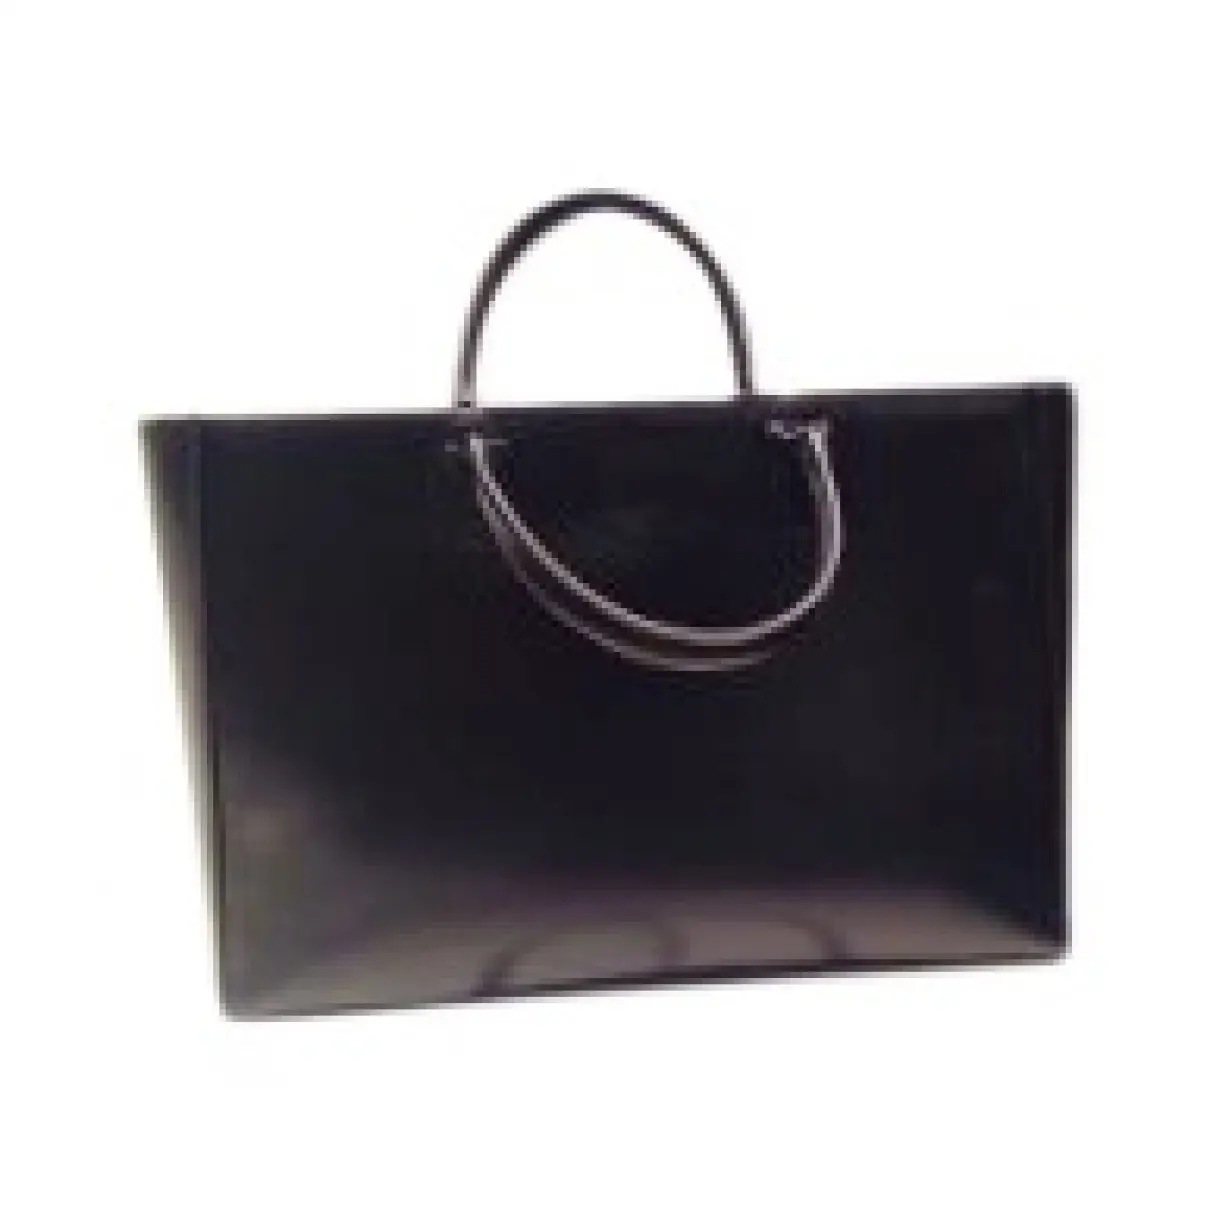 Black Leather Handbag Abaco